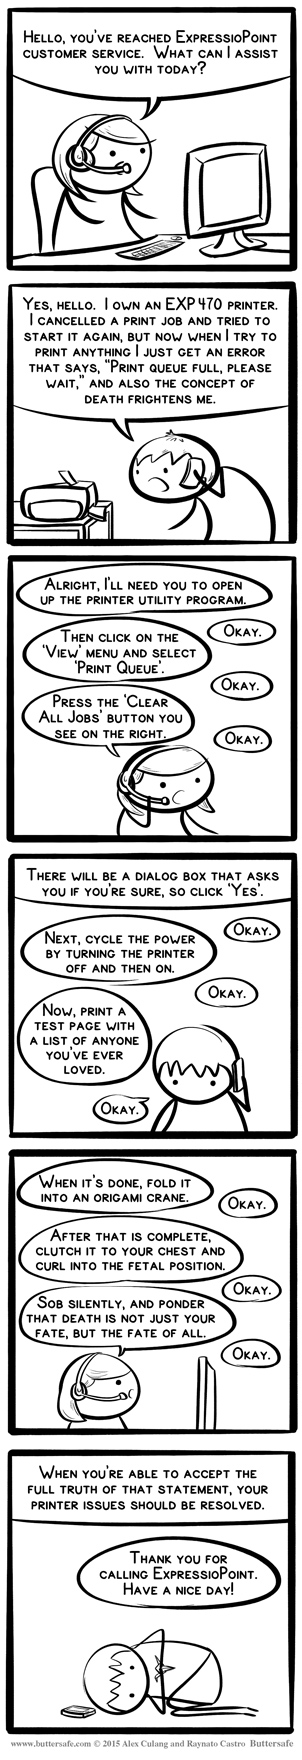 Printer Trouble